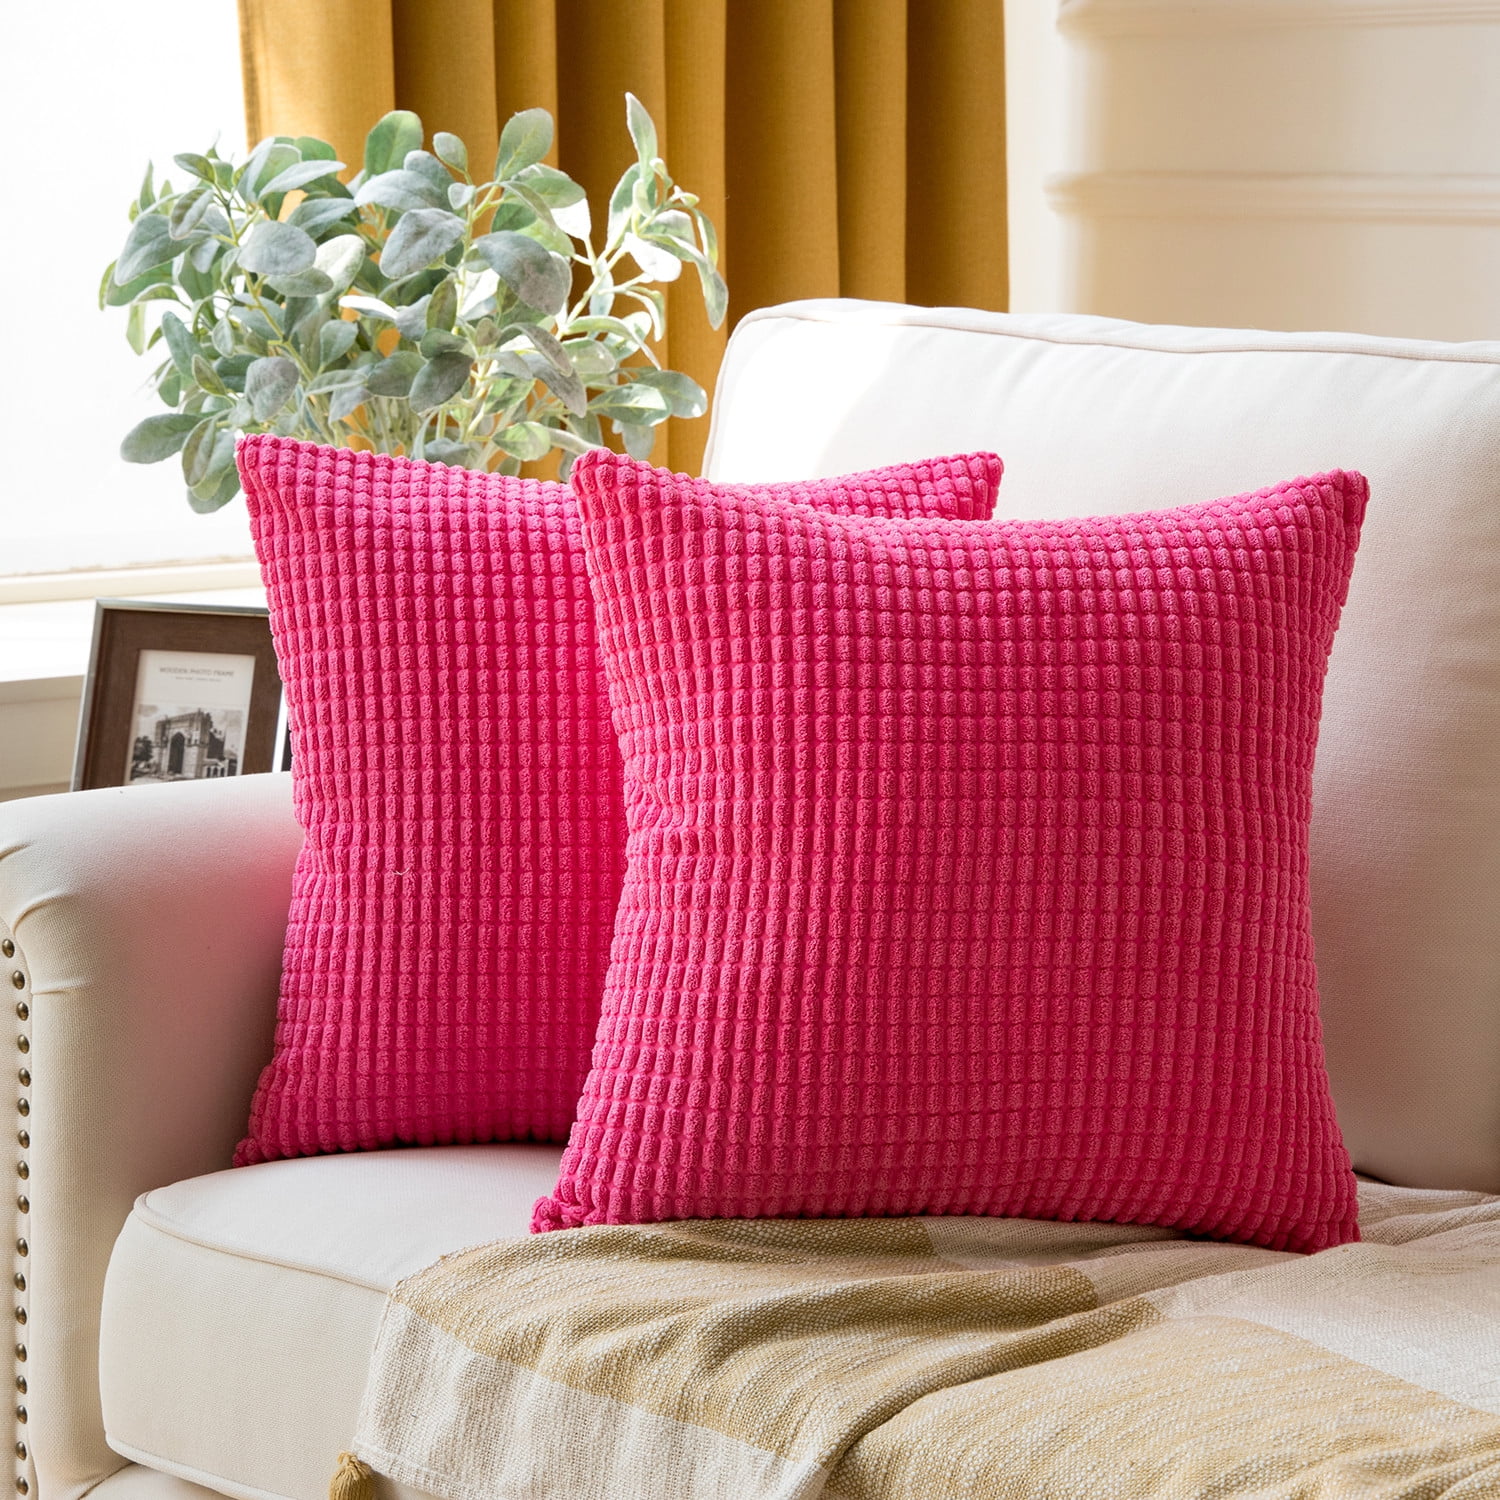 Soft Velvet Striped Decorative Pillows Throw Pillow Cover Cases